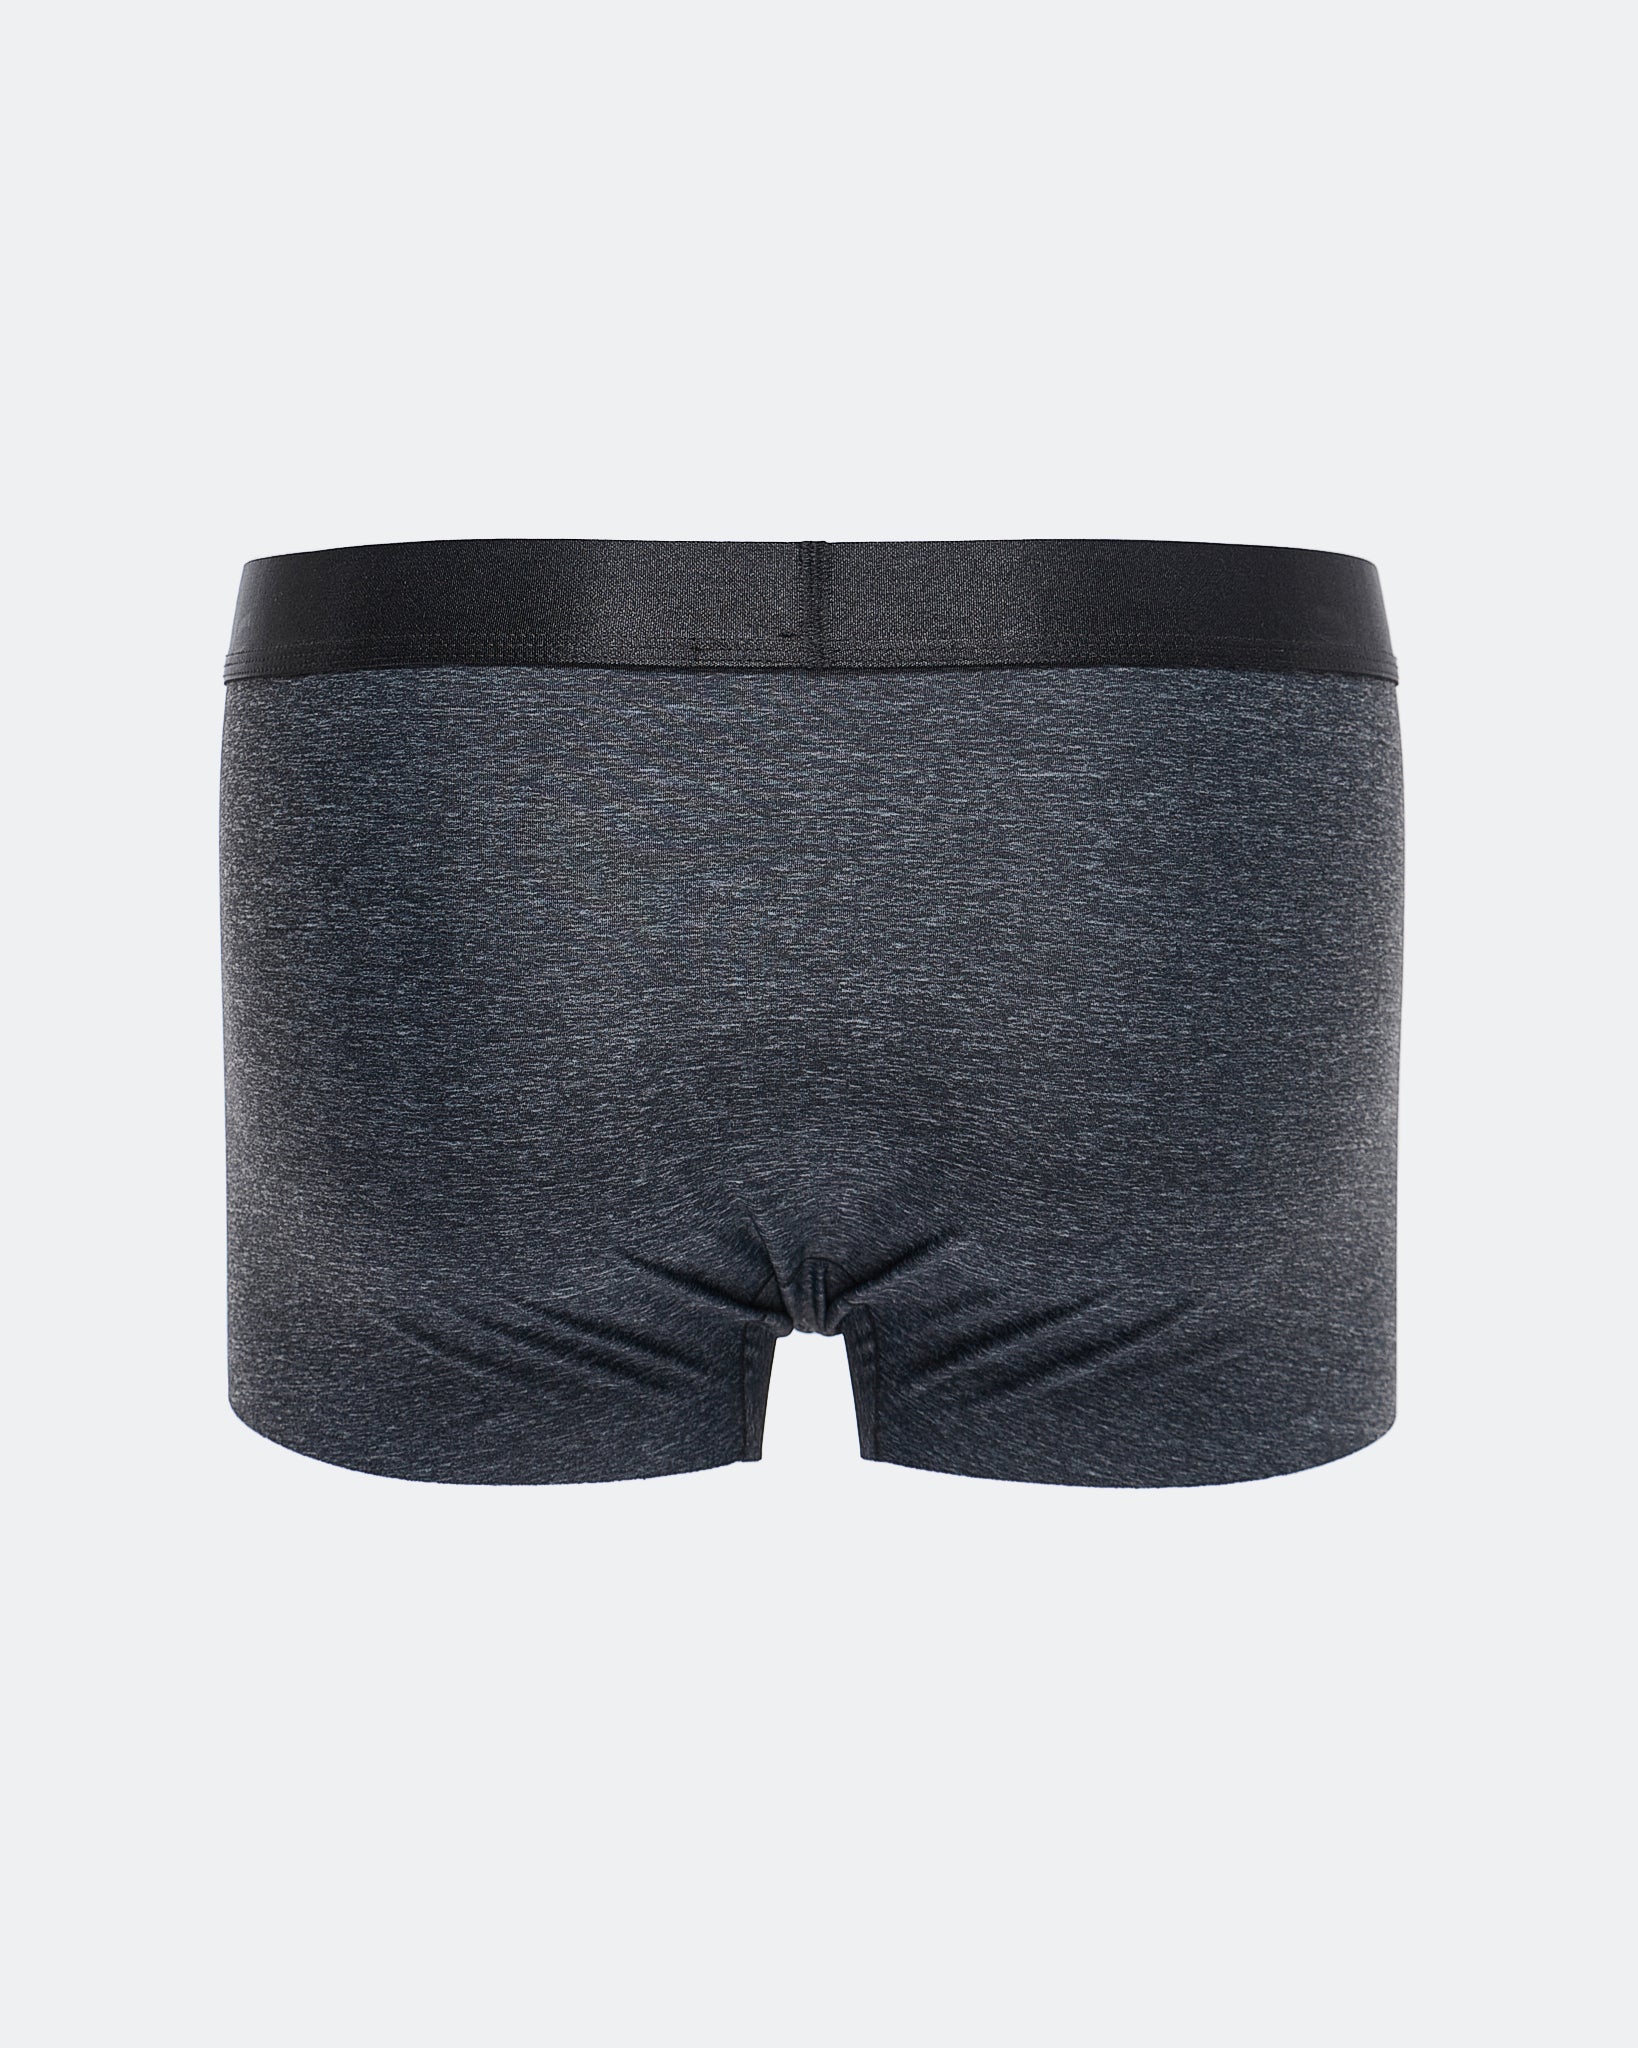 MOI OUTFIT-V Logo Printed Men Underwear 6.50